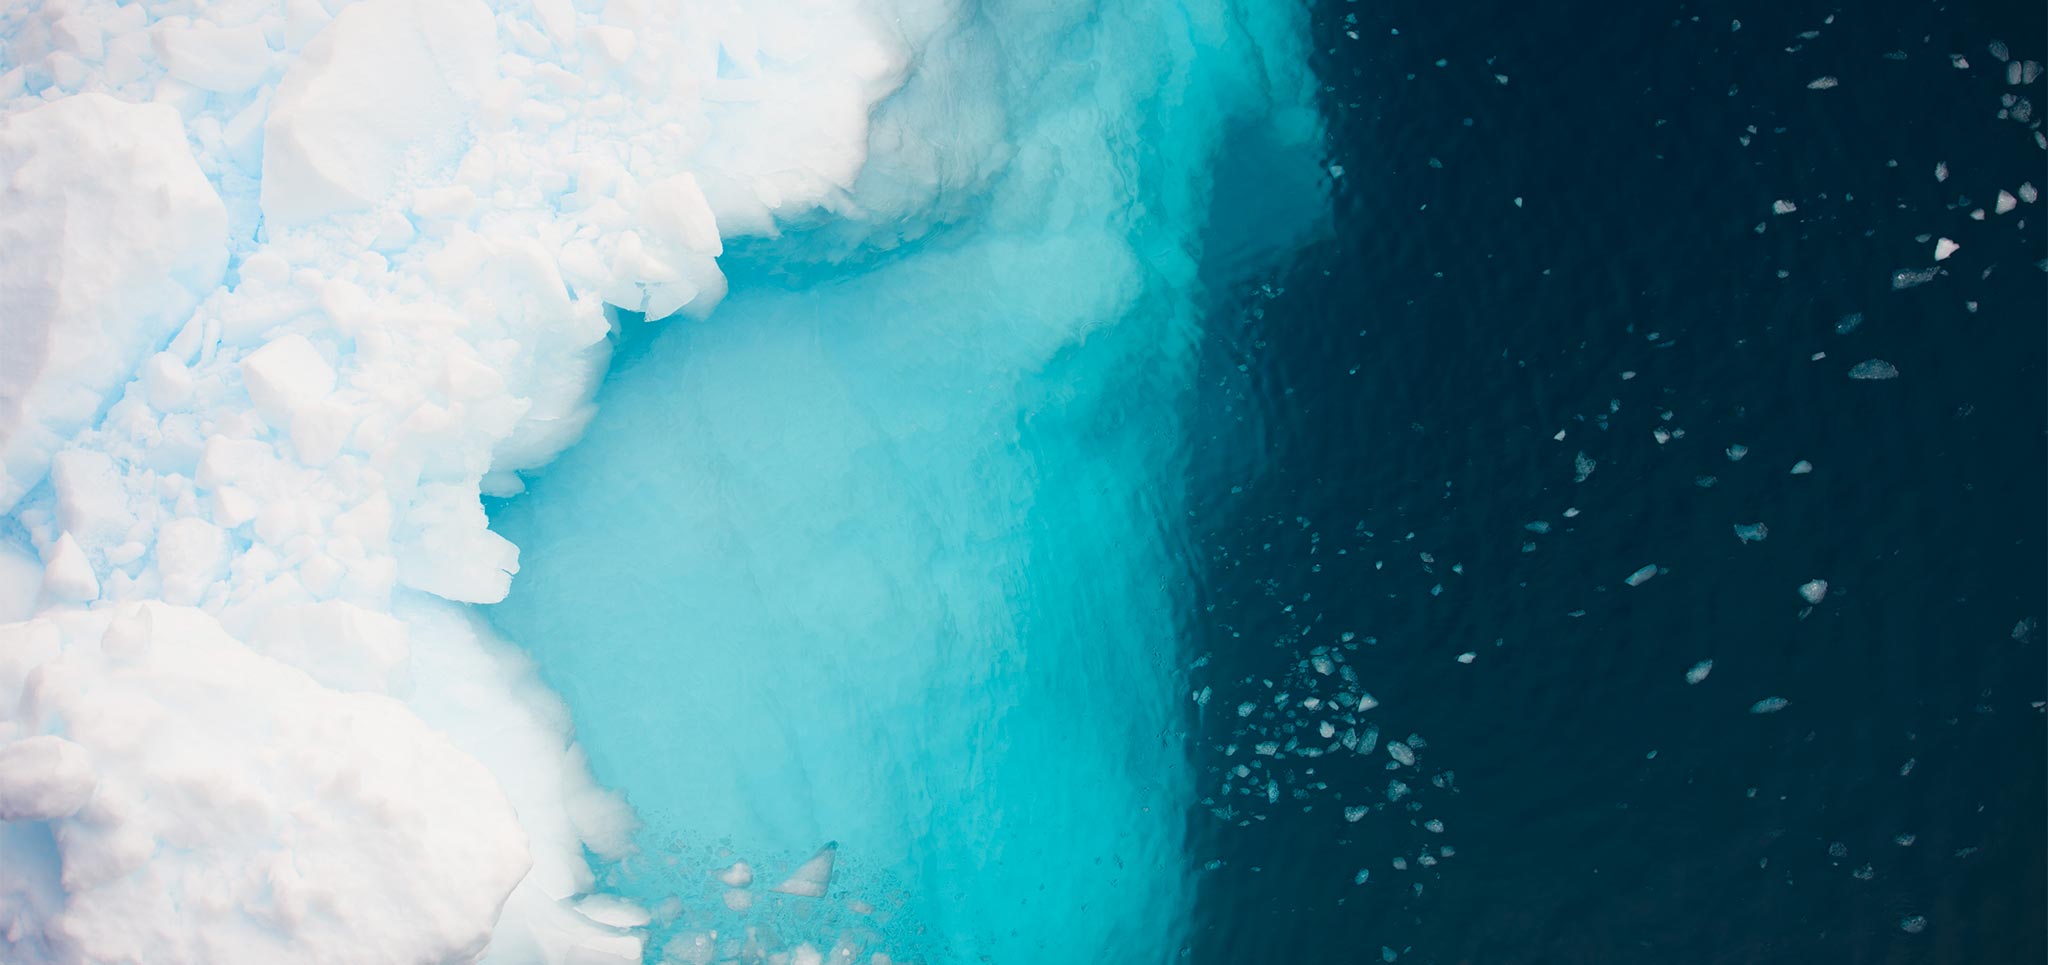 Aerial photograph of an iceberg